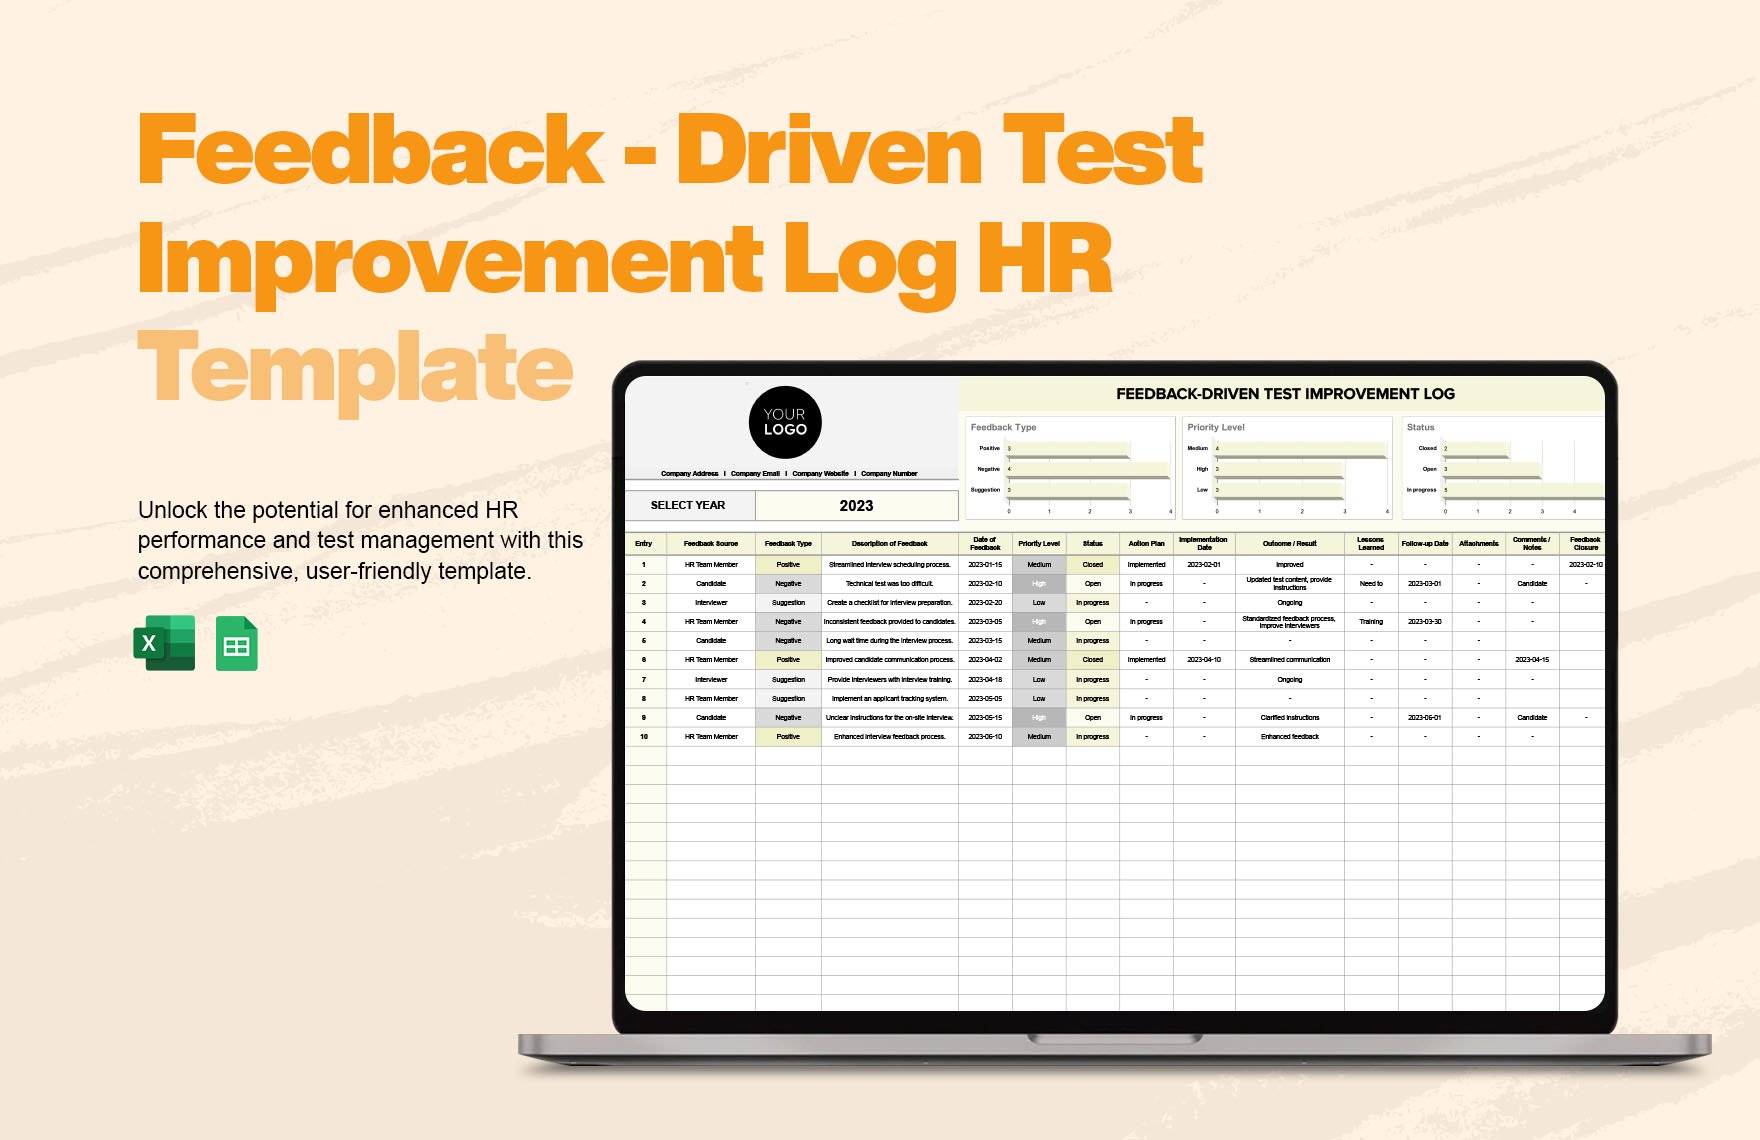 Feedback-driven Test Improvement Log HR Template